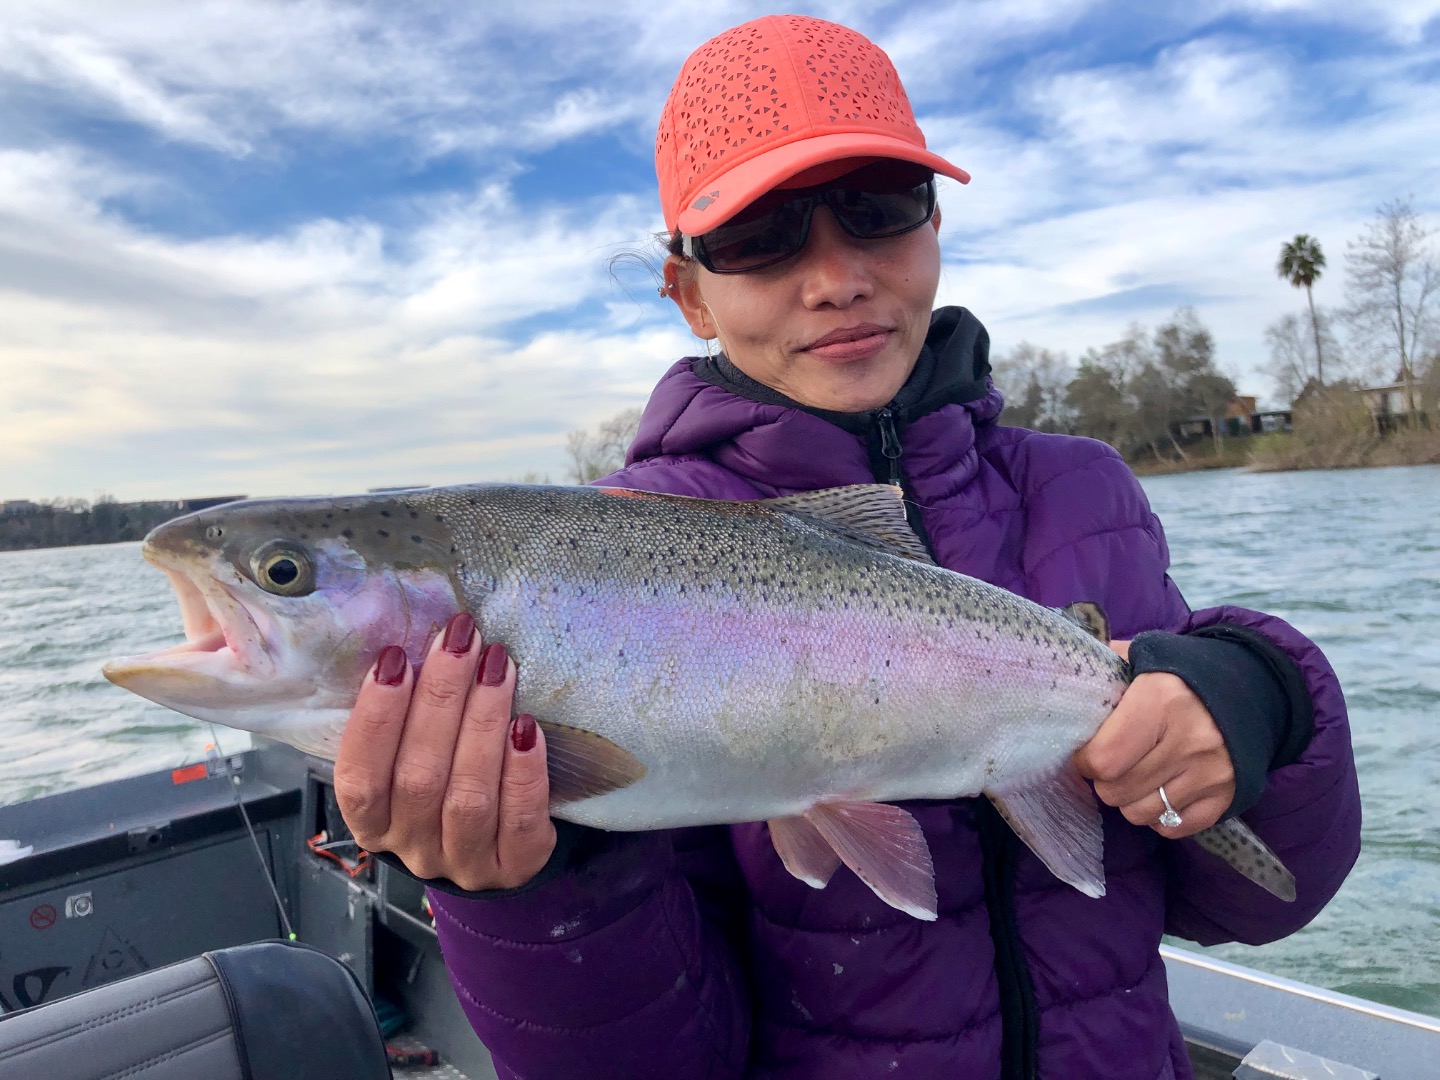 Ultra light trout bite!